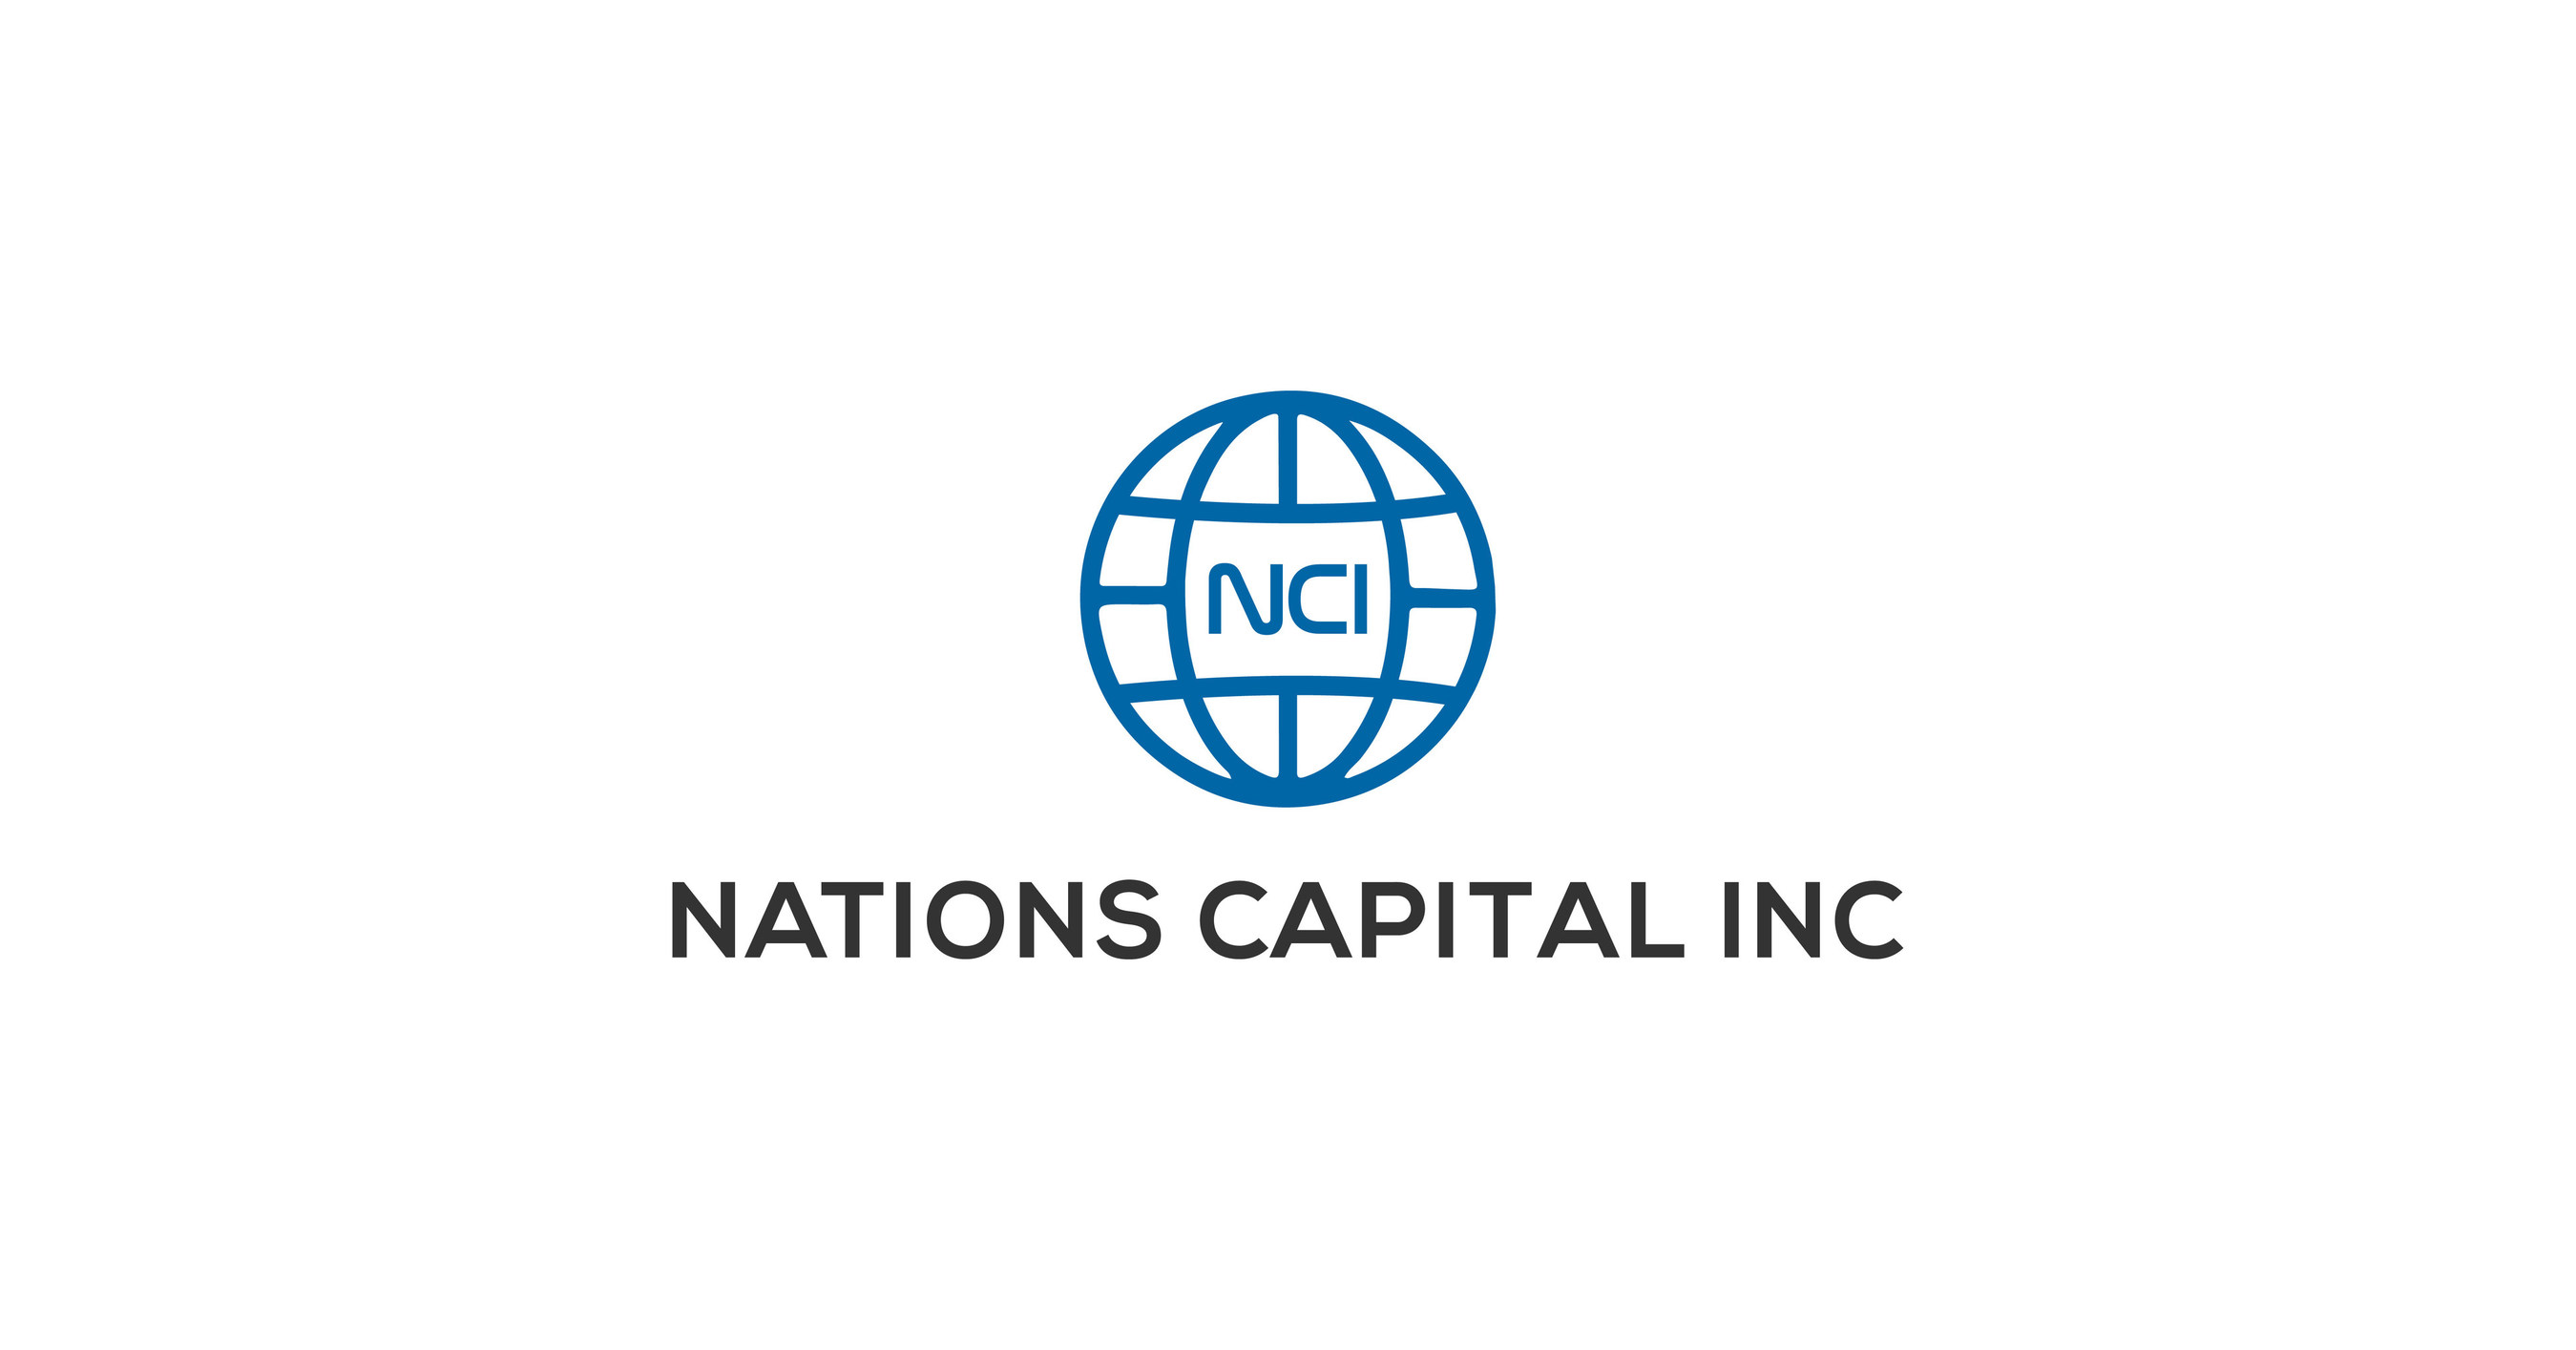 Nations Capital